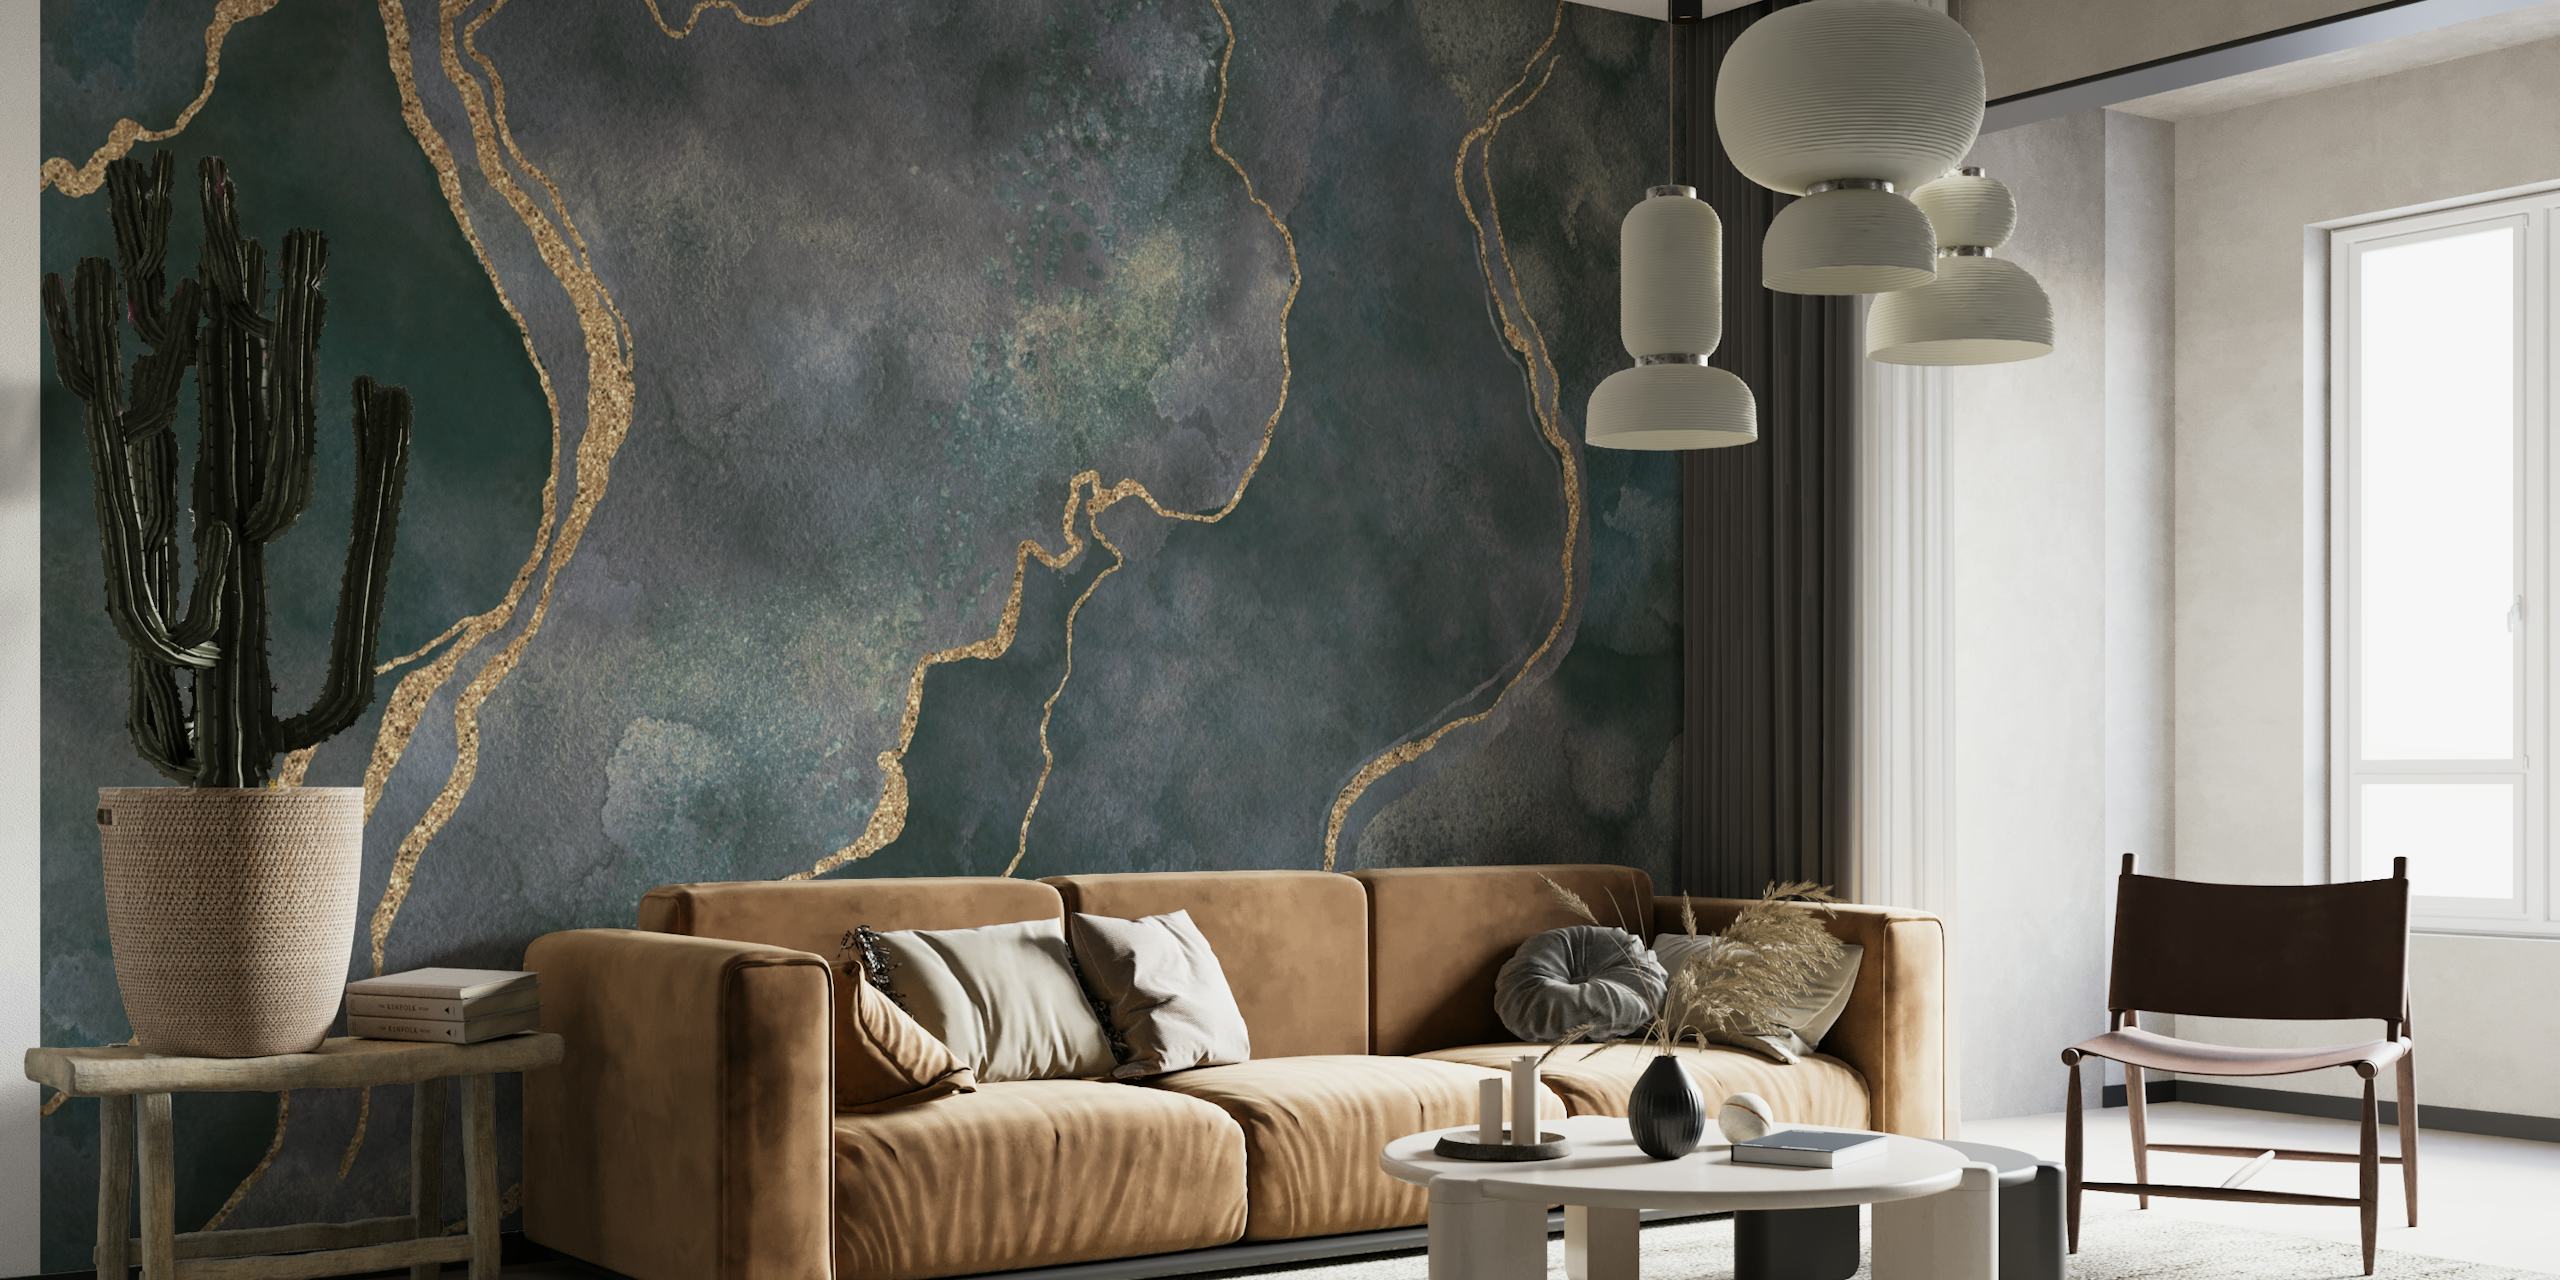 Elegantna zidna slika s uzorkom plavozelenog i sivog mramora